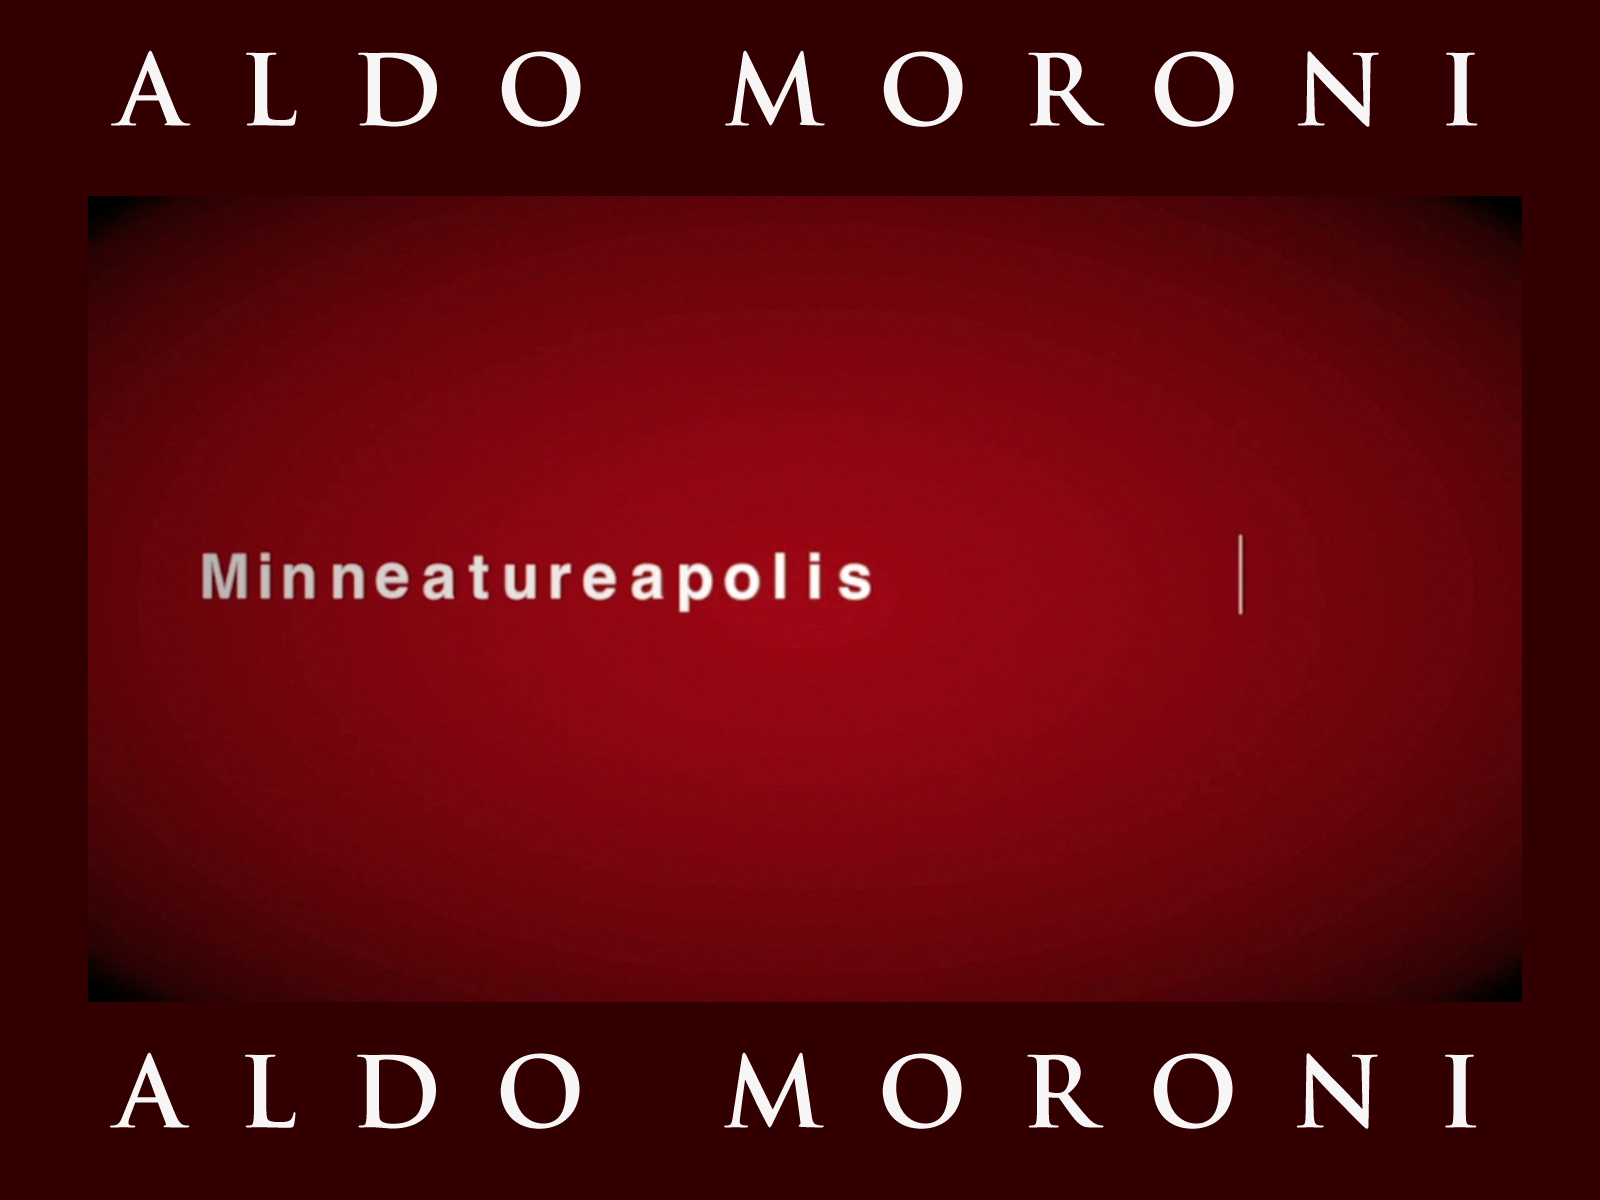 Aldo Moroni Minneatureapolis Promo